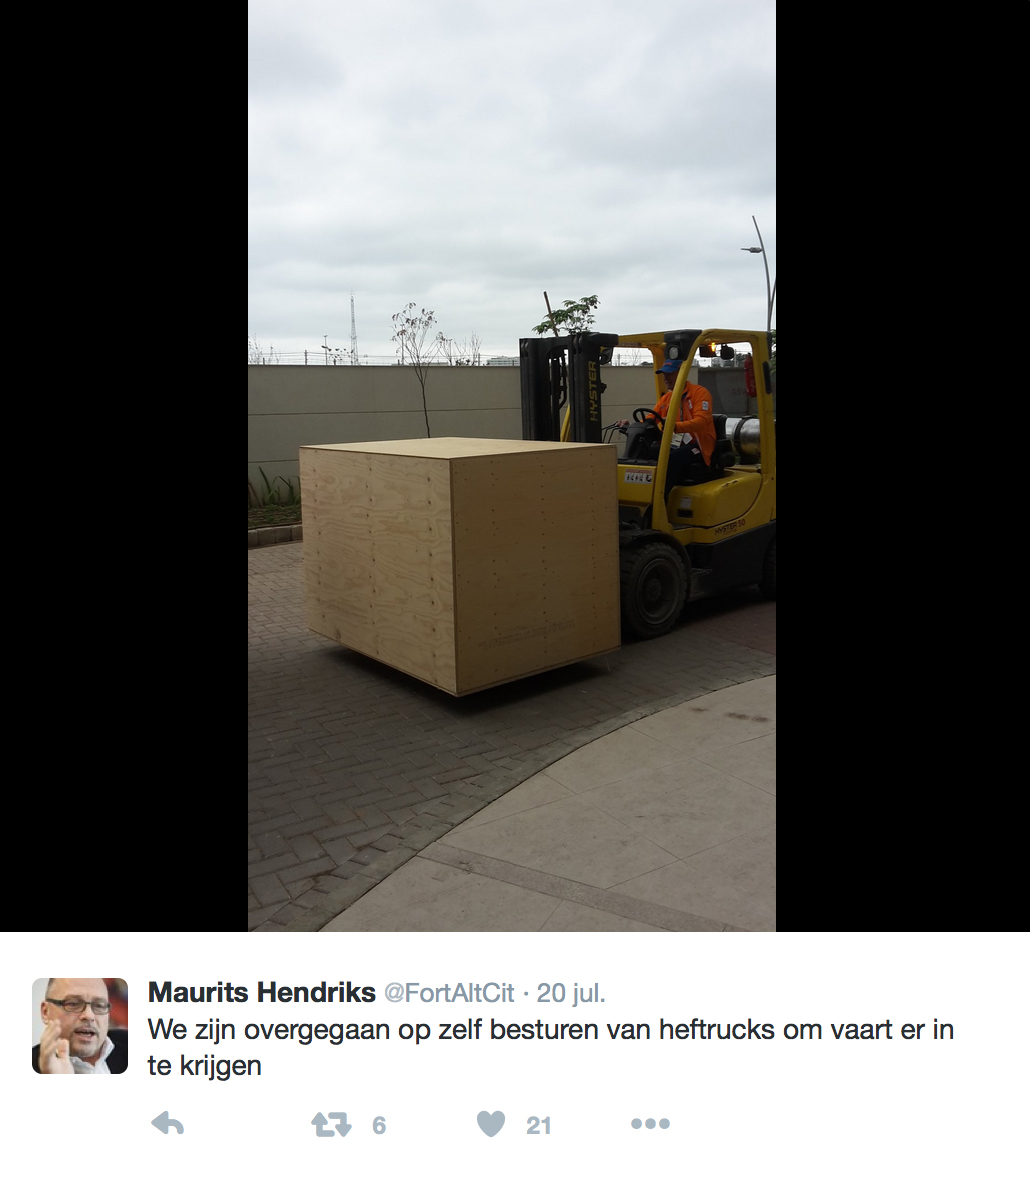 Maurits Hendriks